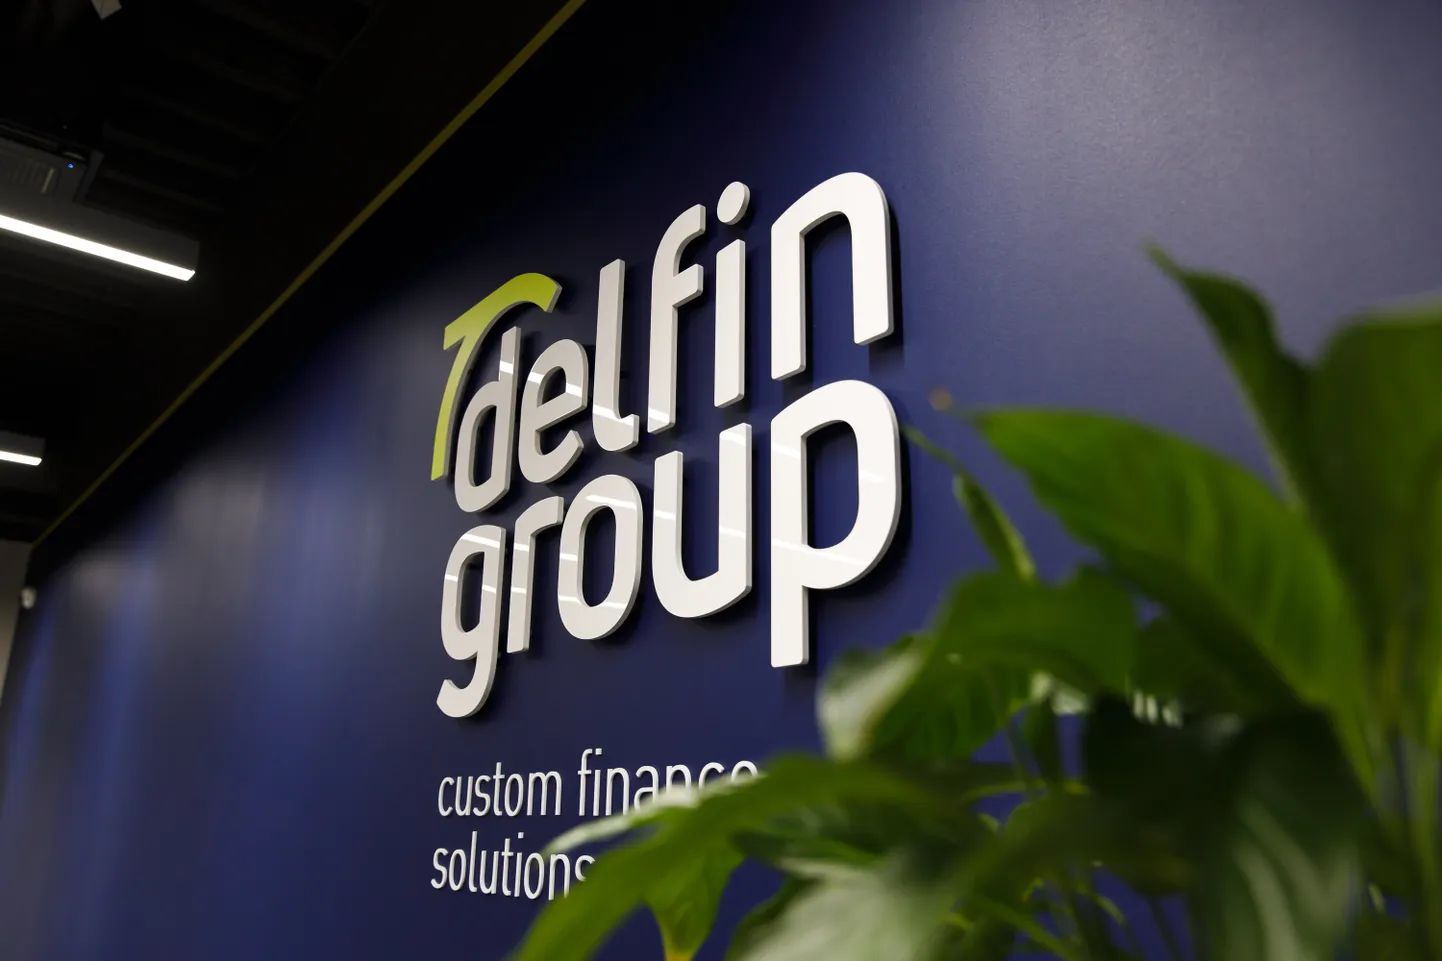 DelfinGroup logo.